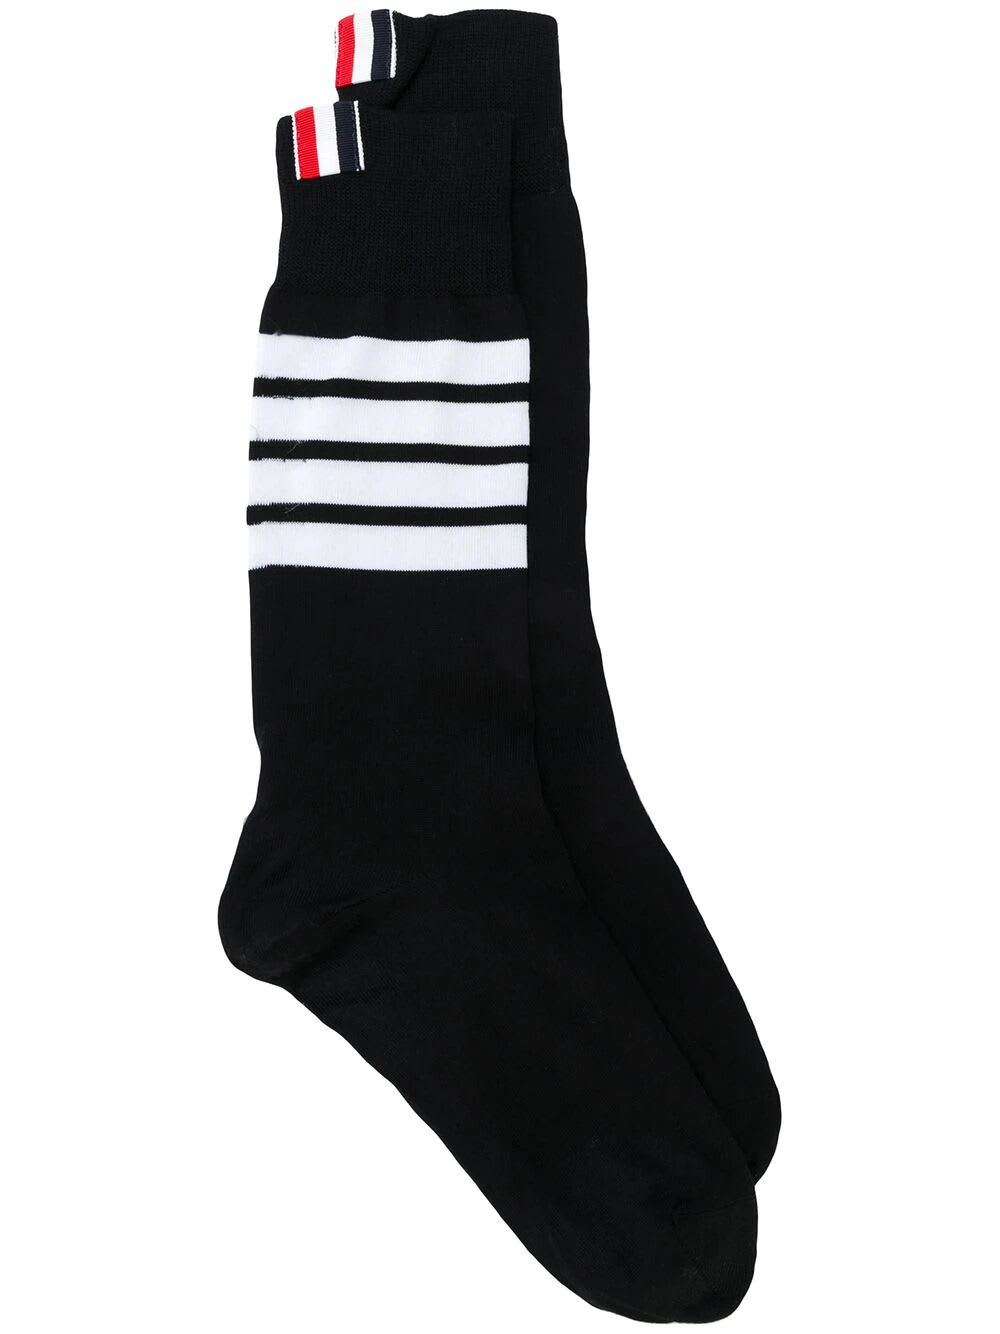 Mid Calf Socks With 4 Bar